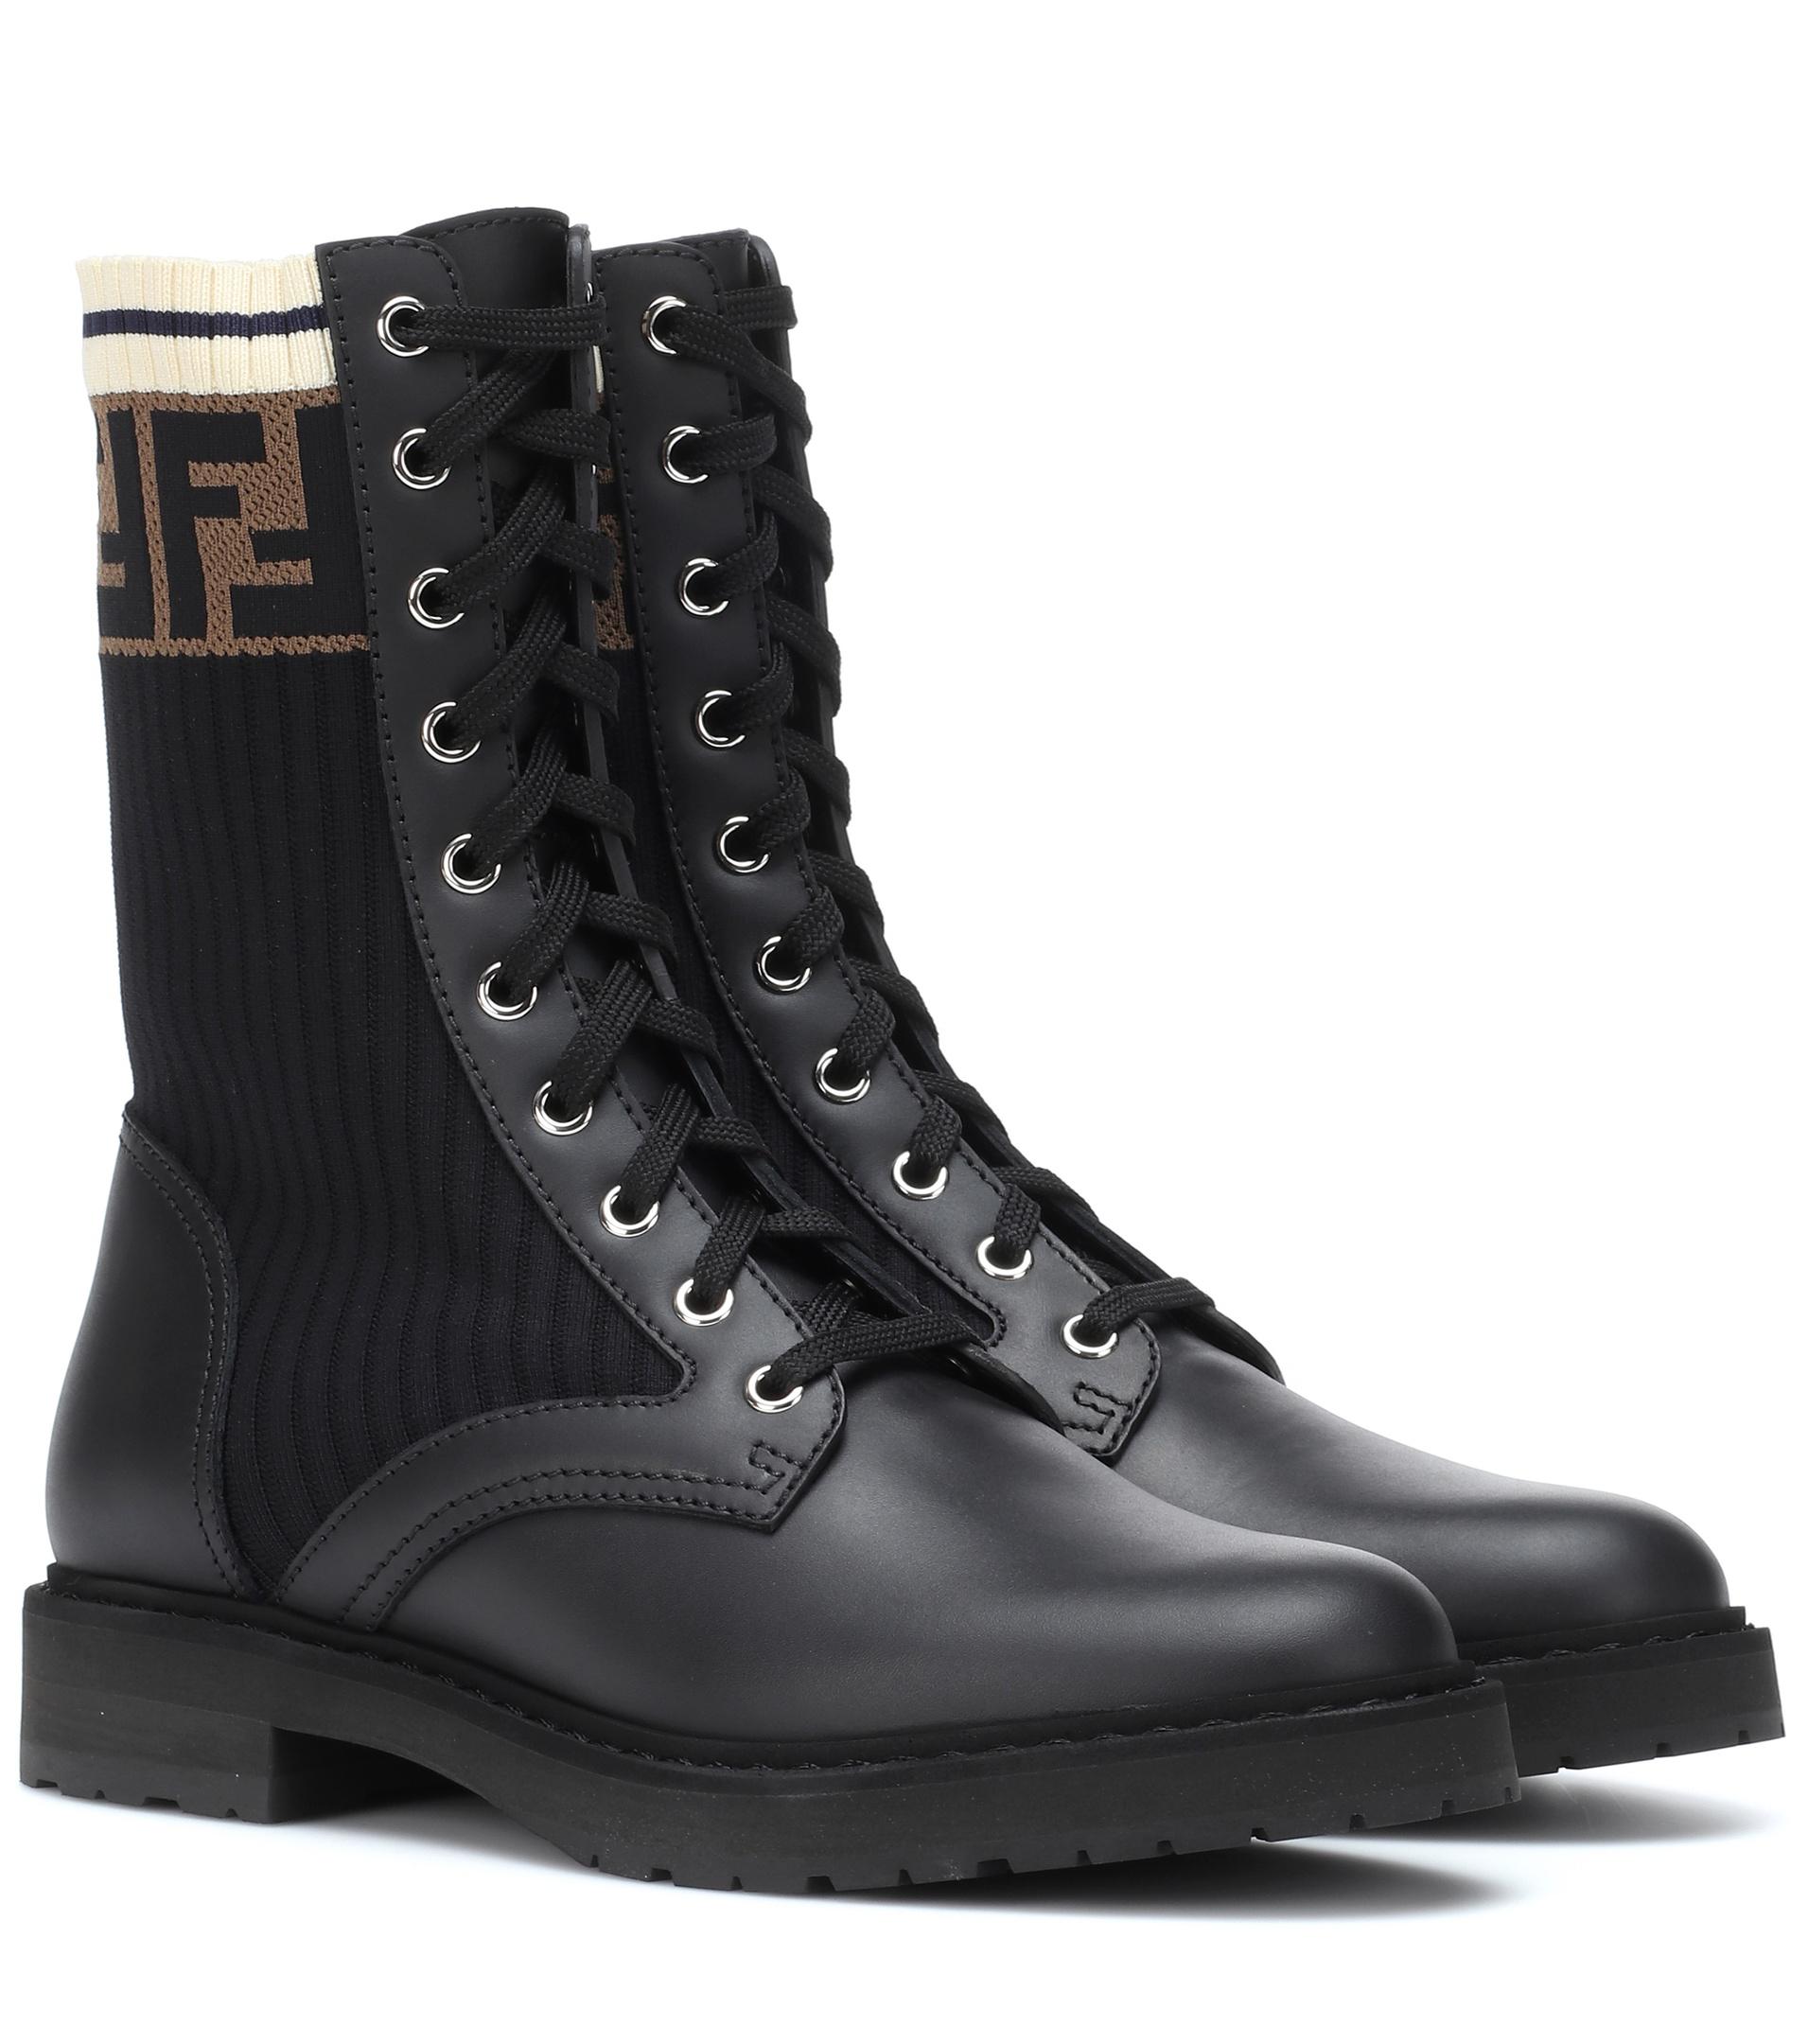 Fendi Leather Biker Boots in Black - Save 26% - Lyst